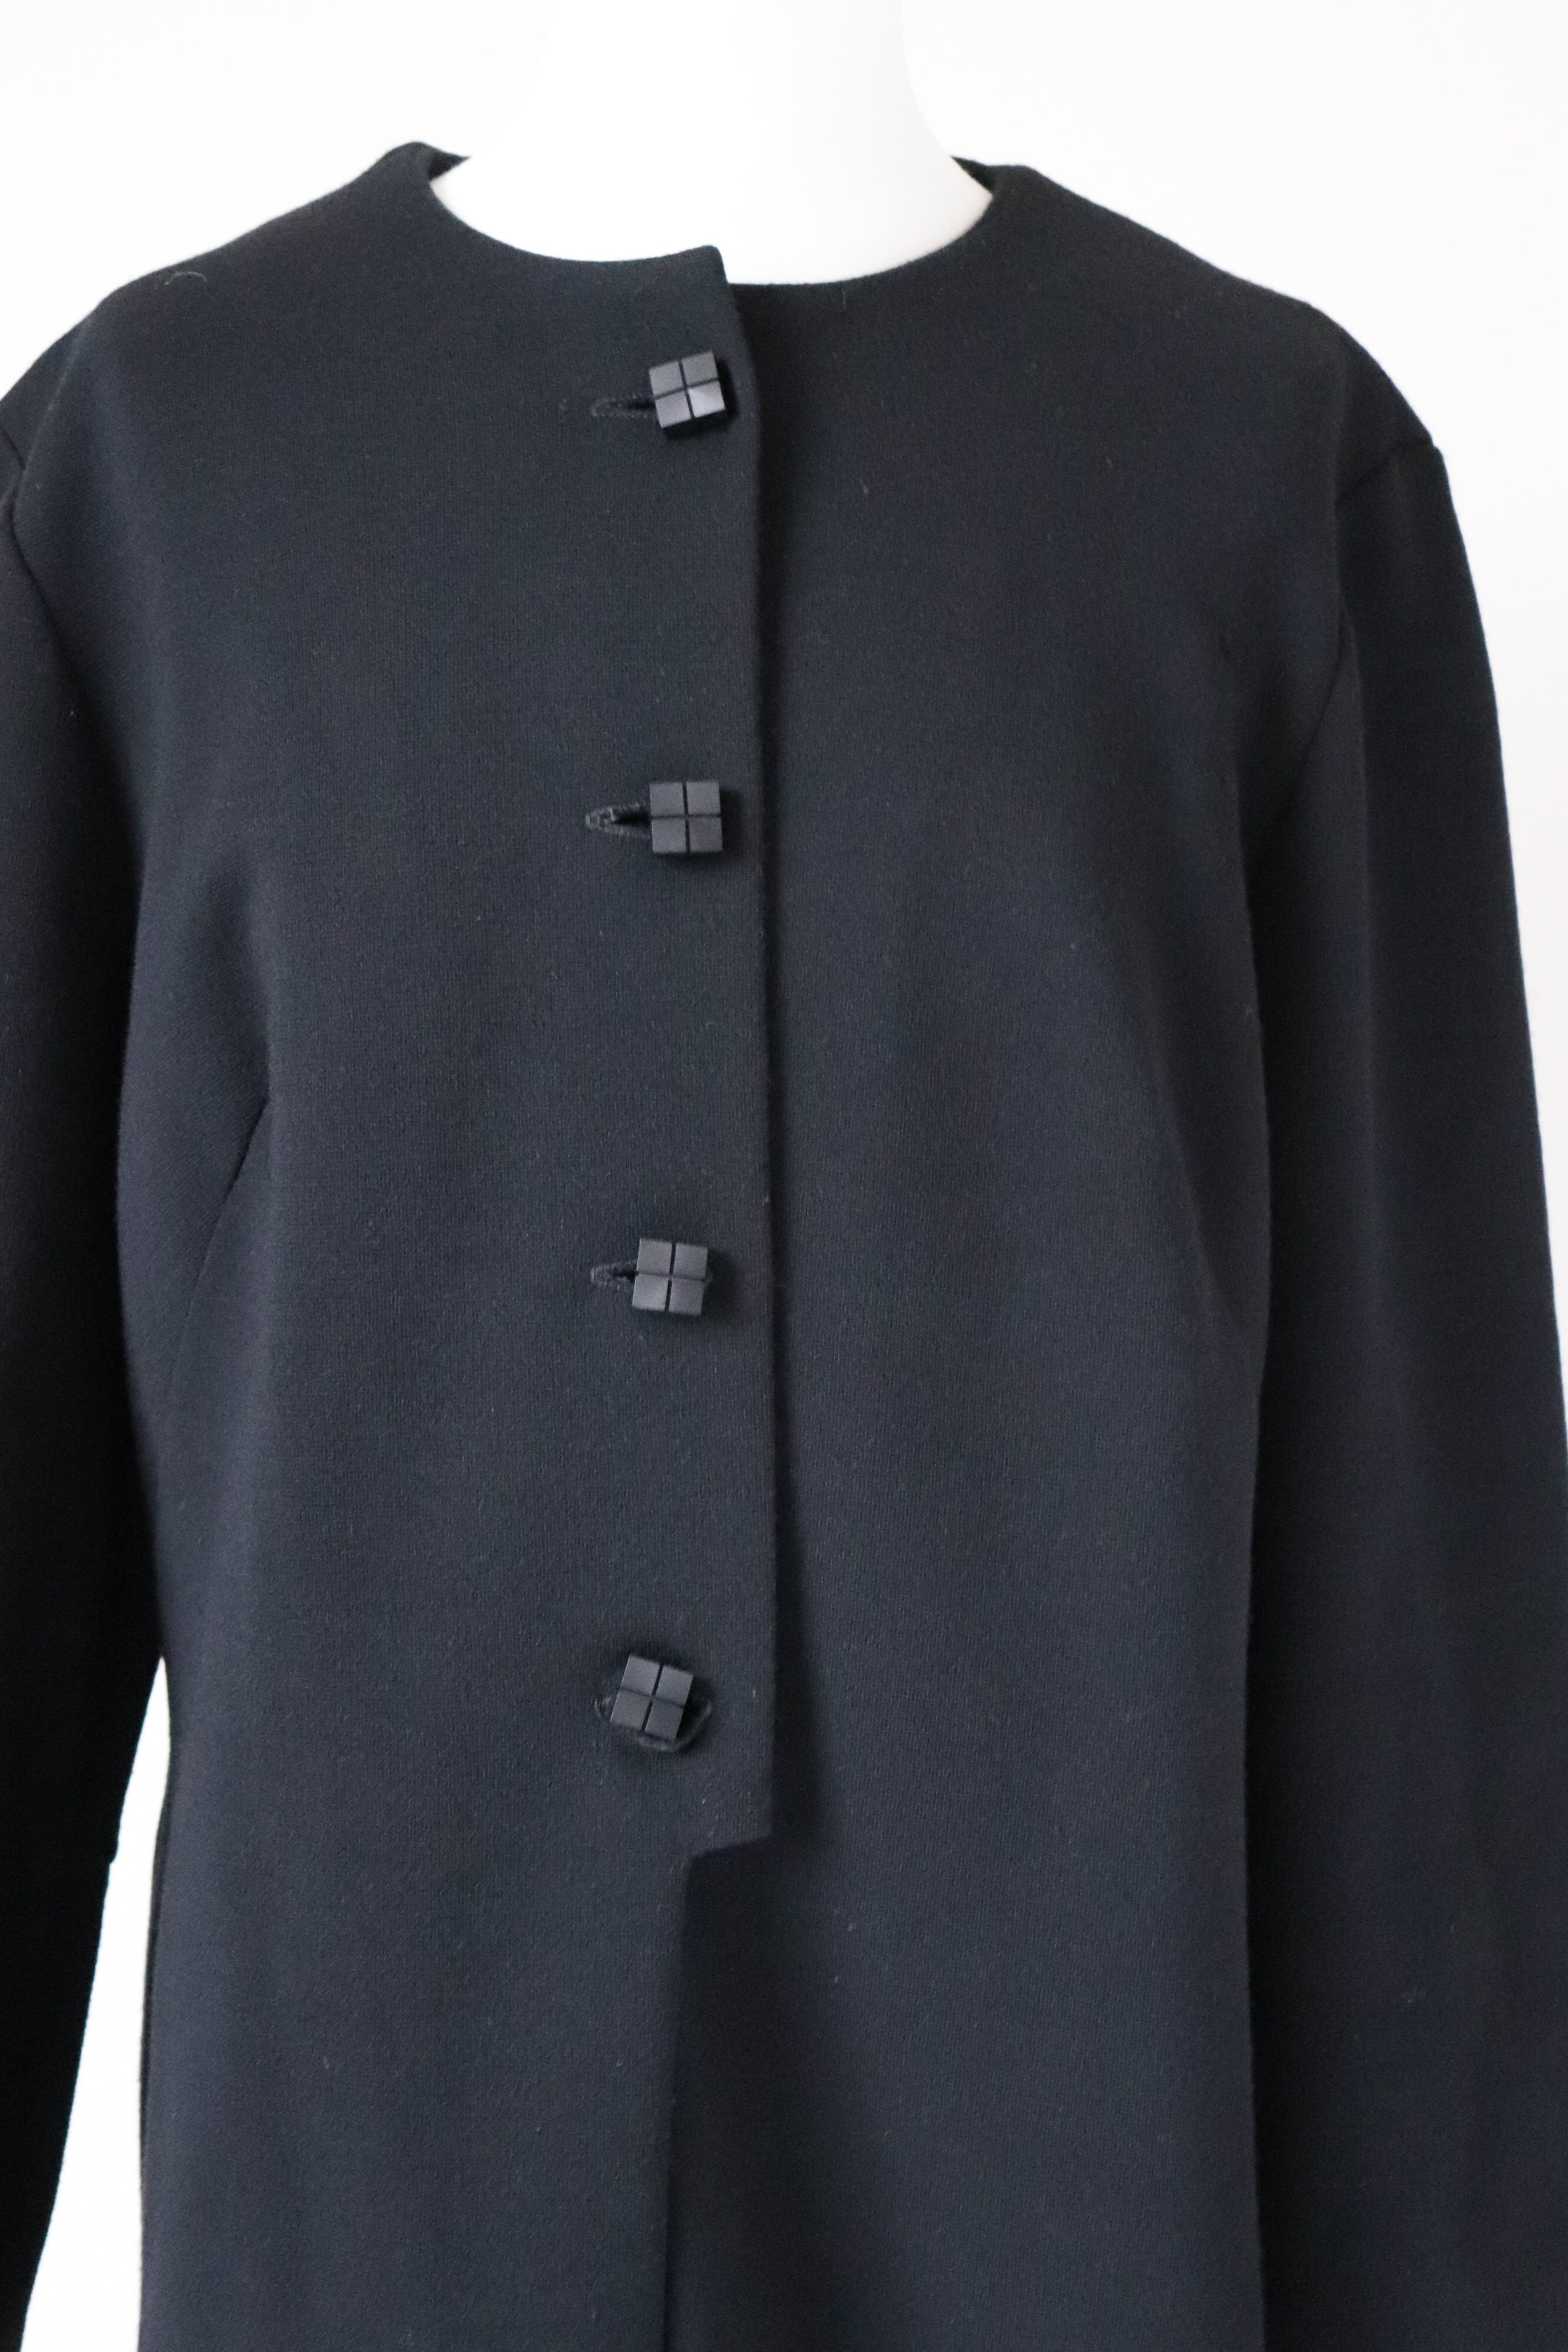 Knitted Collarless Wool Cardigan Jacket - 1960s Jersey Flair - XL / UK 16